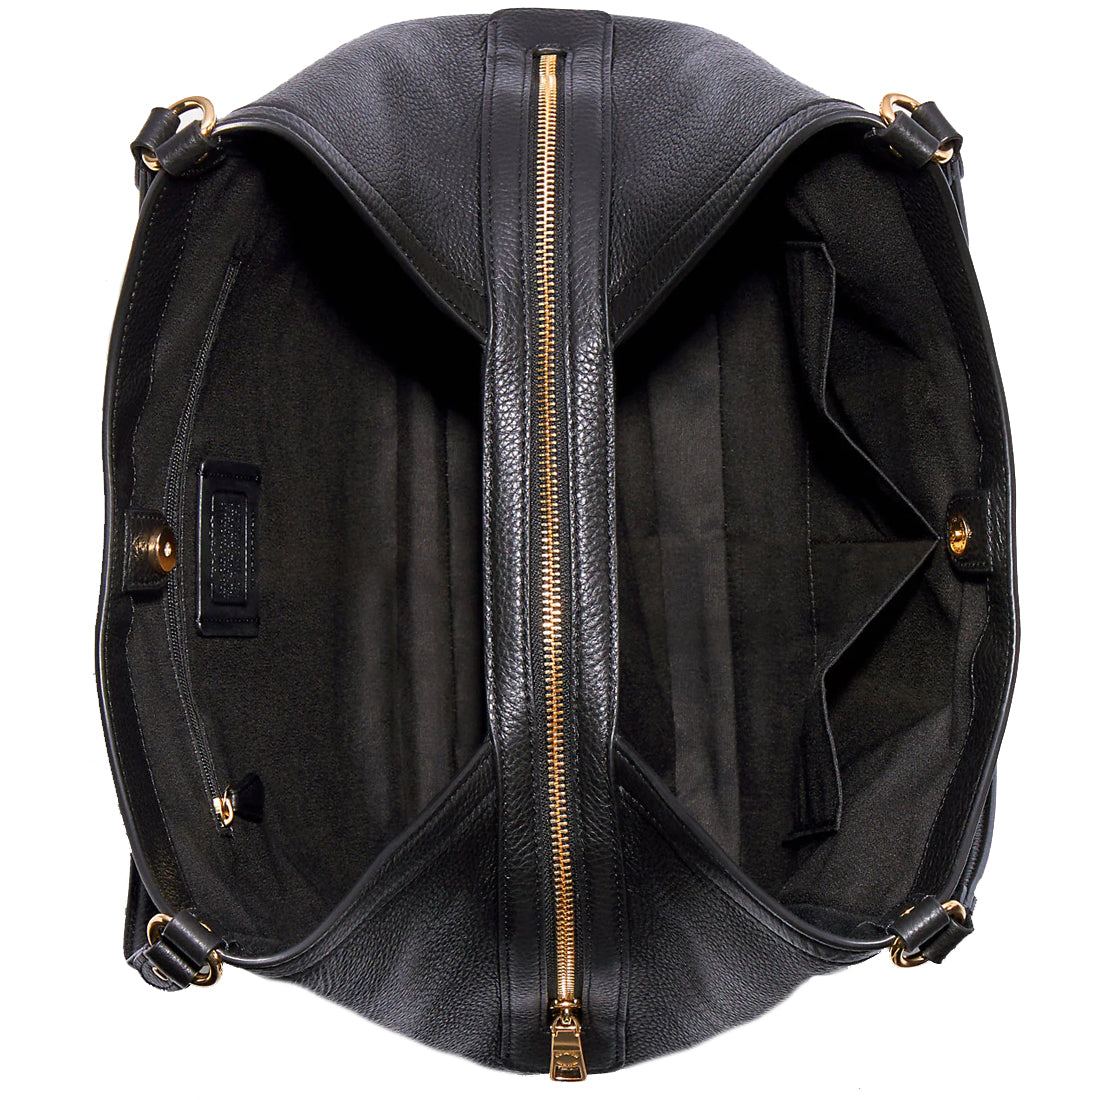 Buy Coach Kristy Shoulder Bag in Black C6231 Online in Singapore ...